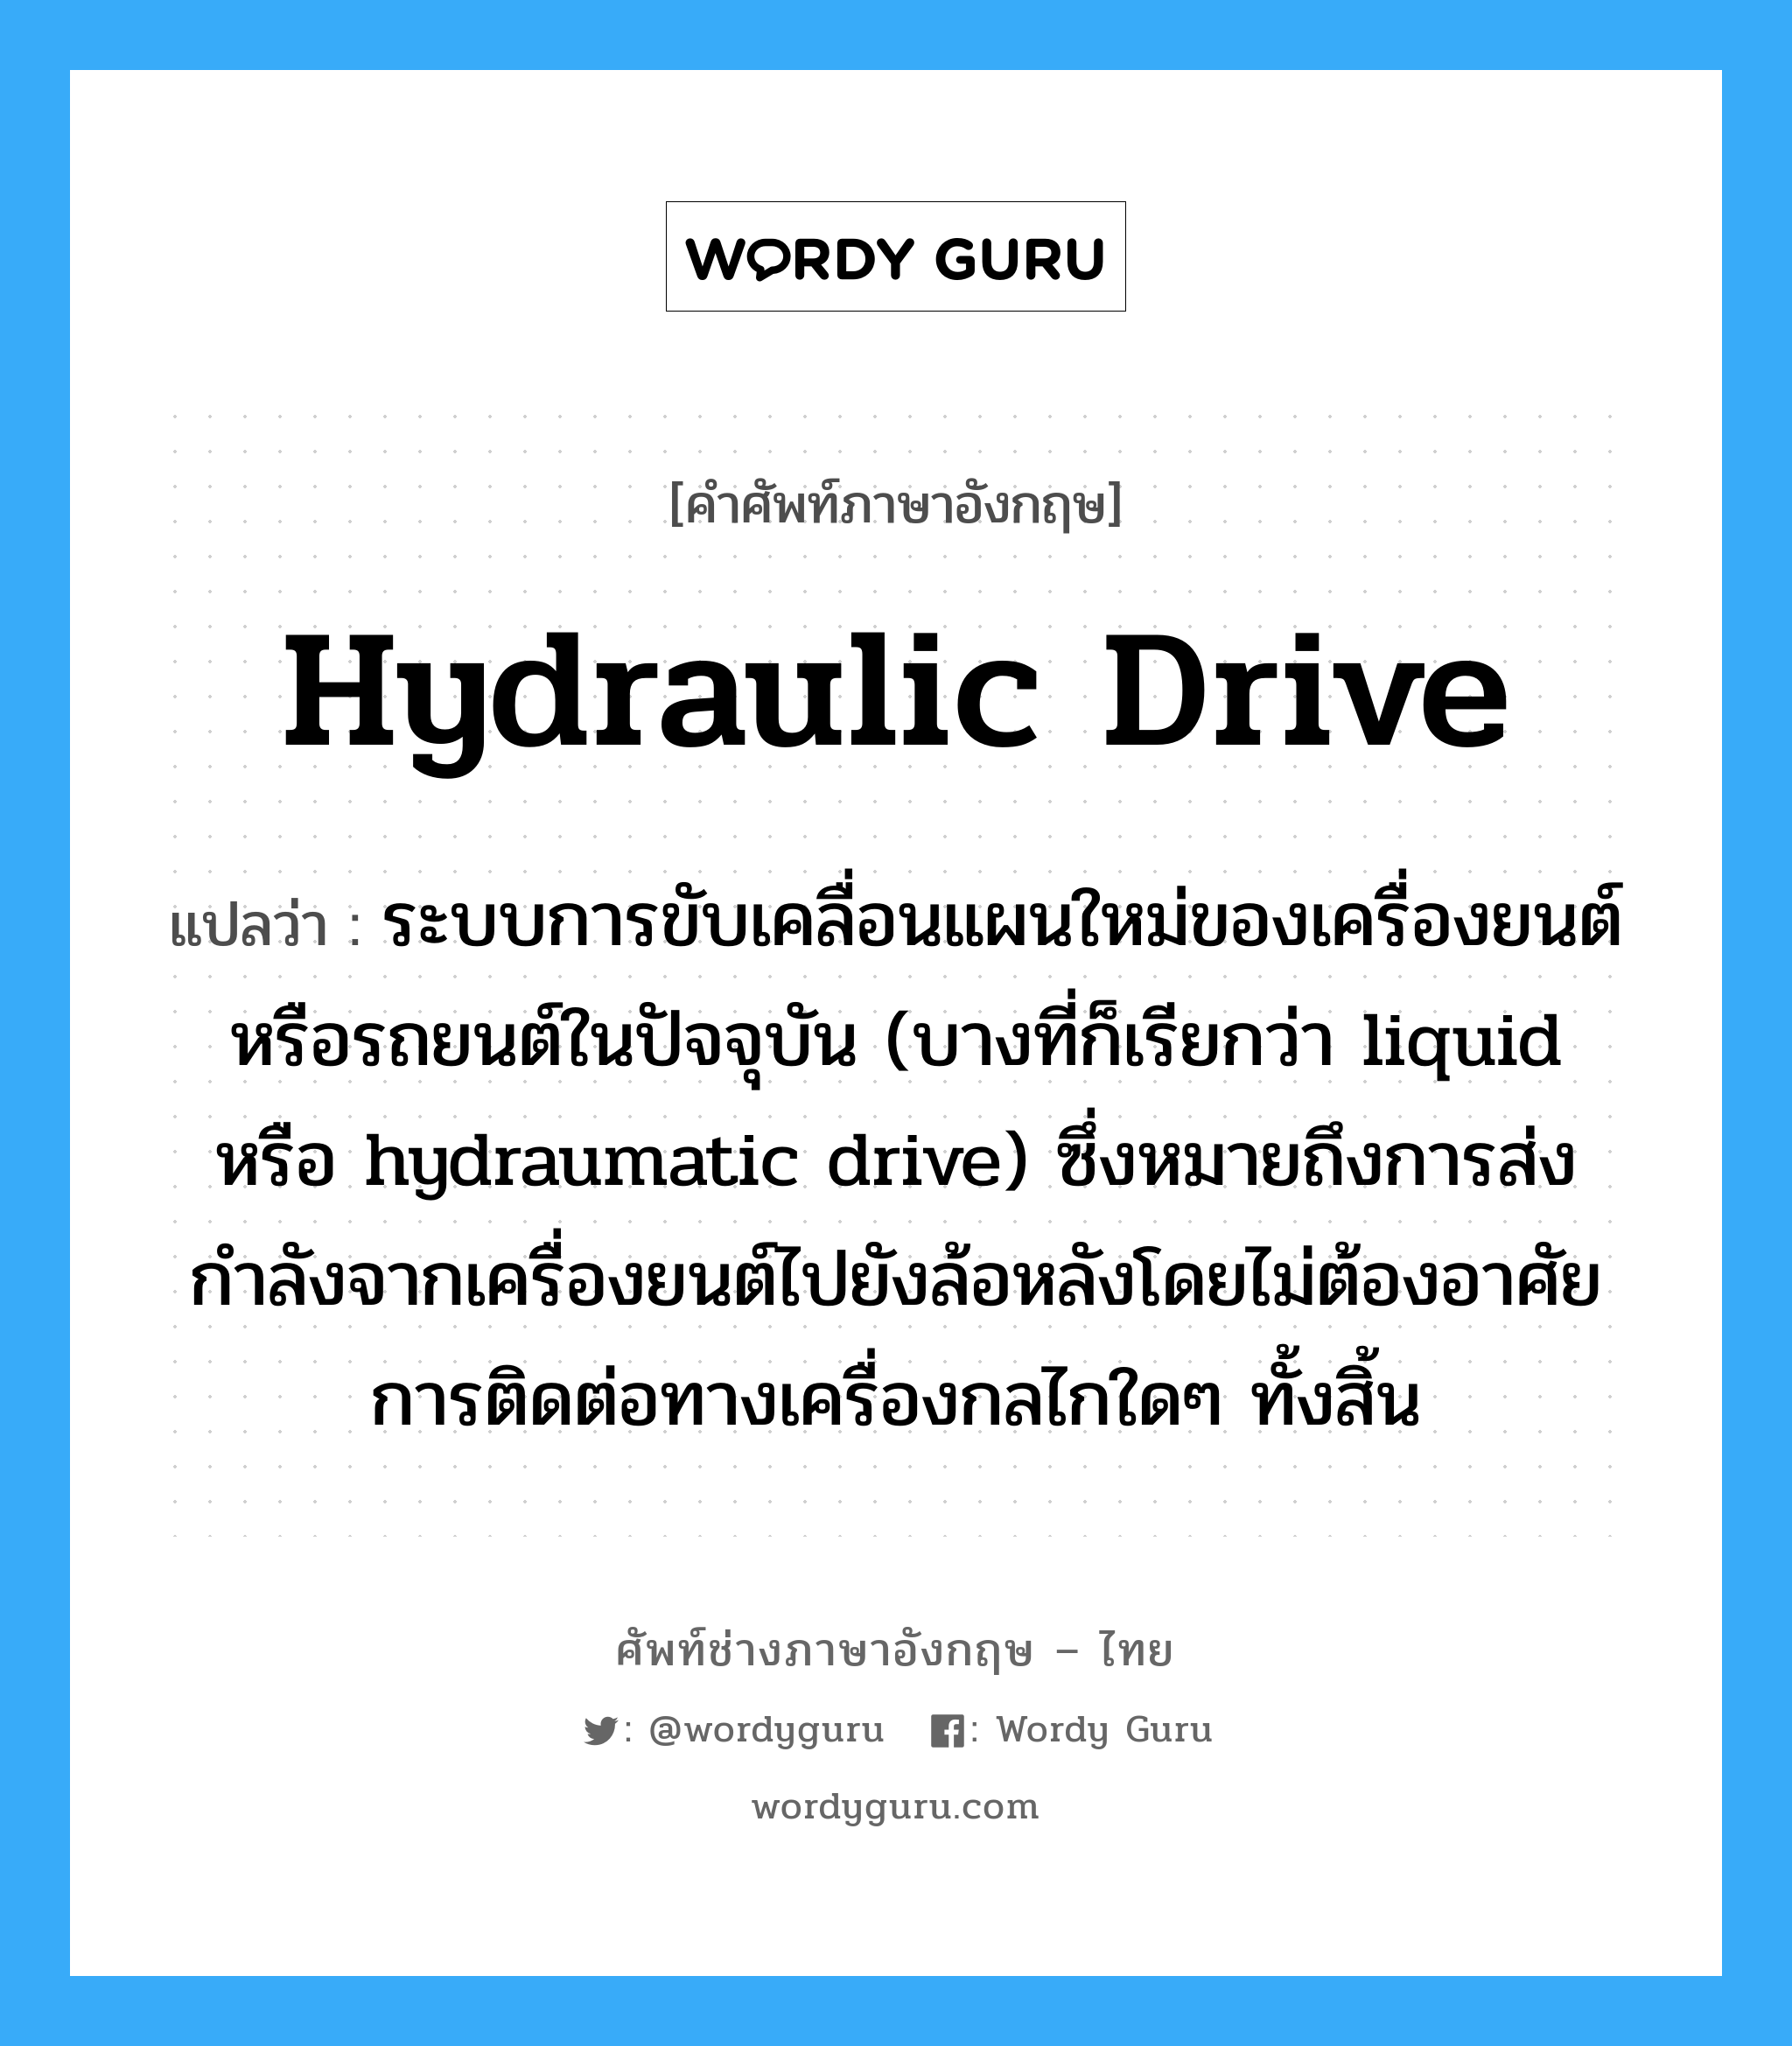 hydraulic drive แปลว่า?, คำศัพท์ช่างภาษาอังกฤษ - ไทย hydraulic drive คำศัพท์ภาษาอังกฤษ hydraulic drive แปลว่า ระบบการขับเคลื่อนแผนใหม่ของเครื่องยนต์หรือรถยนต์ในปัจจุบัน (บางที่ก็เรียกว่า liquid หรือ hydraumatic drive) ซึ่งหมายถึงการส่งกำลังจากเครื่องยนต์ไปยังล้อหลังโดยไม่ต้องอาศัยการติดต่อทางเครื่องกลไกใดๆ ทั้งสิ้น